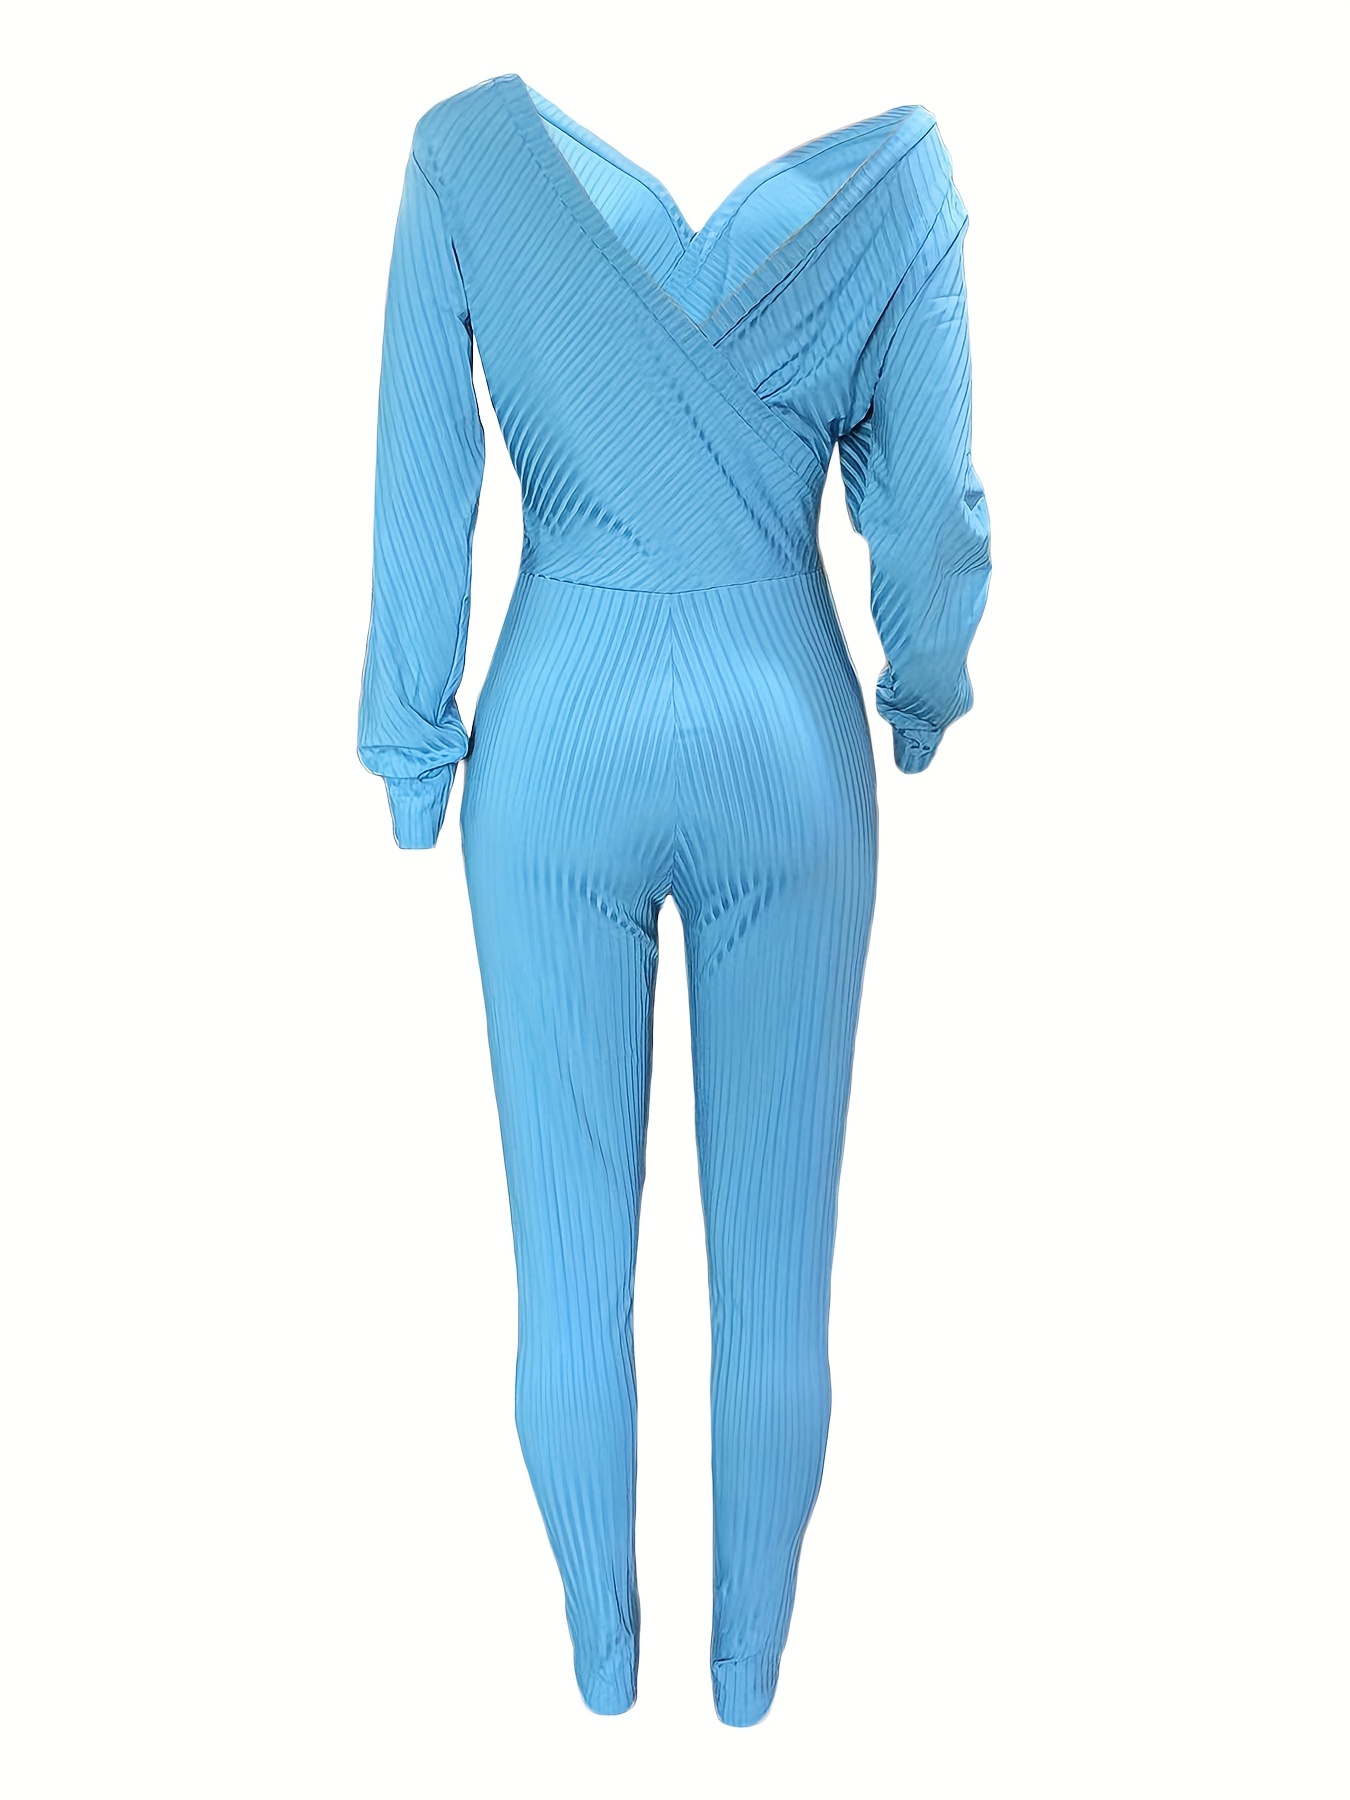 Business Casual Surplice Neck Romper Jumpsuit, Elegant Long Sleeve Romper  Jumpsuit, Women's Clothing